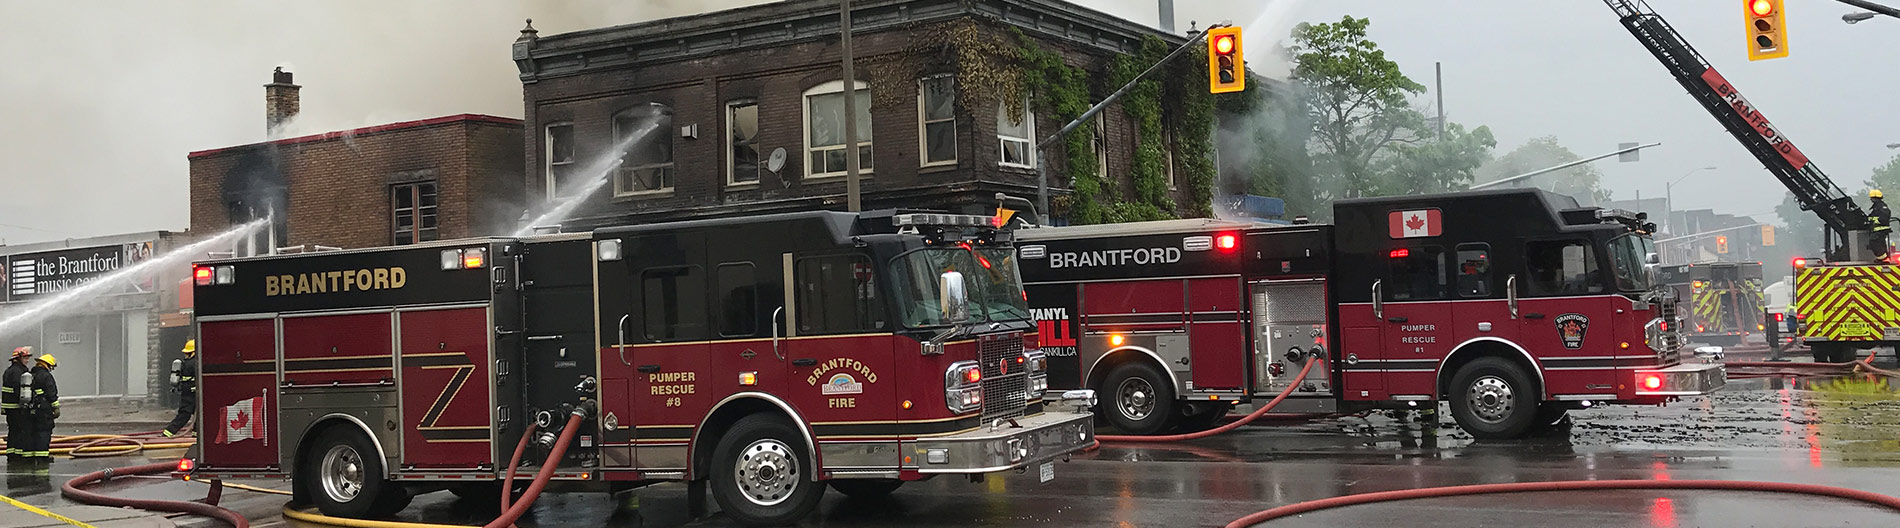 Brantford firetrucks at fire scene